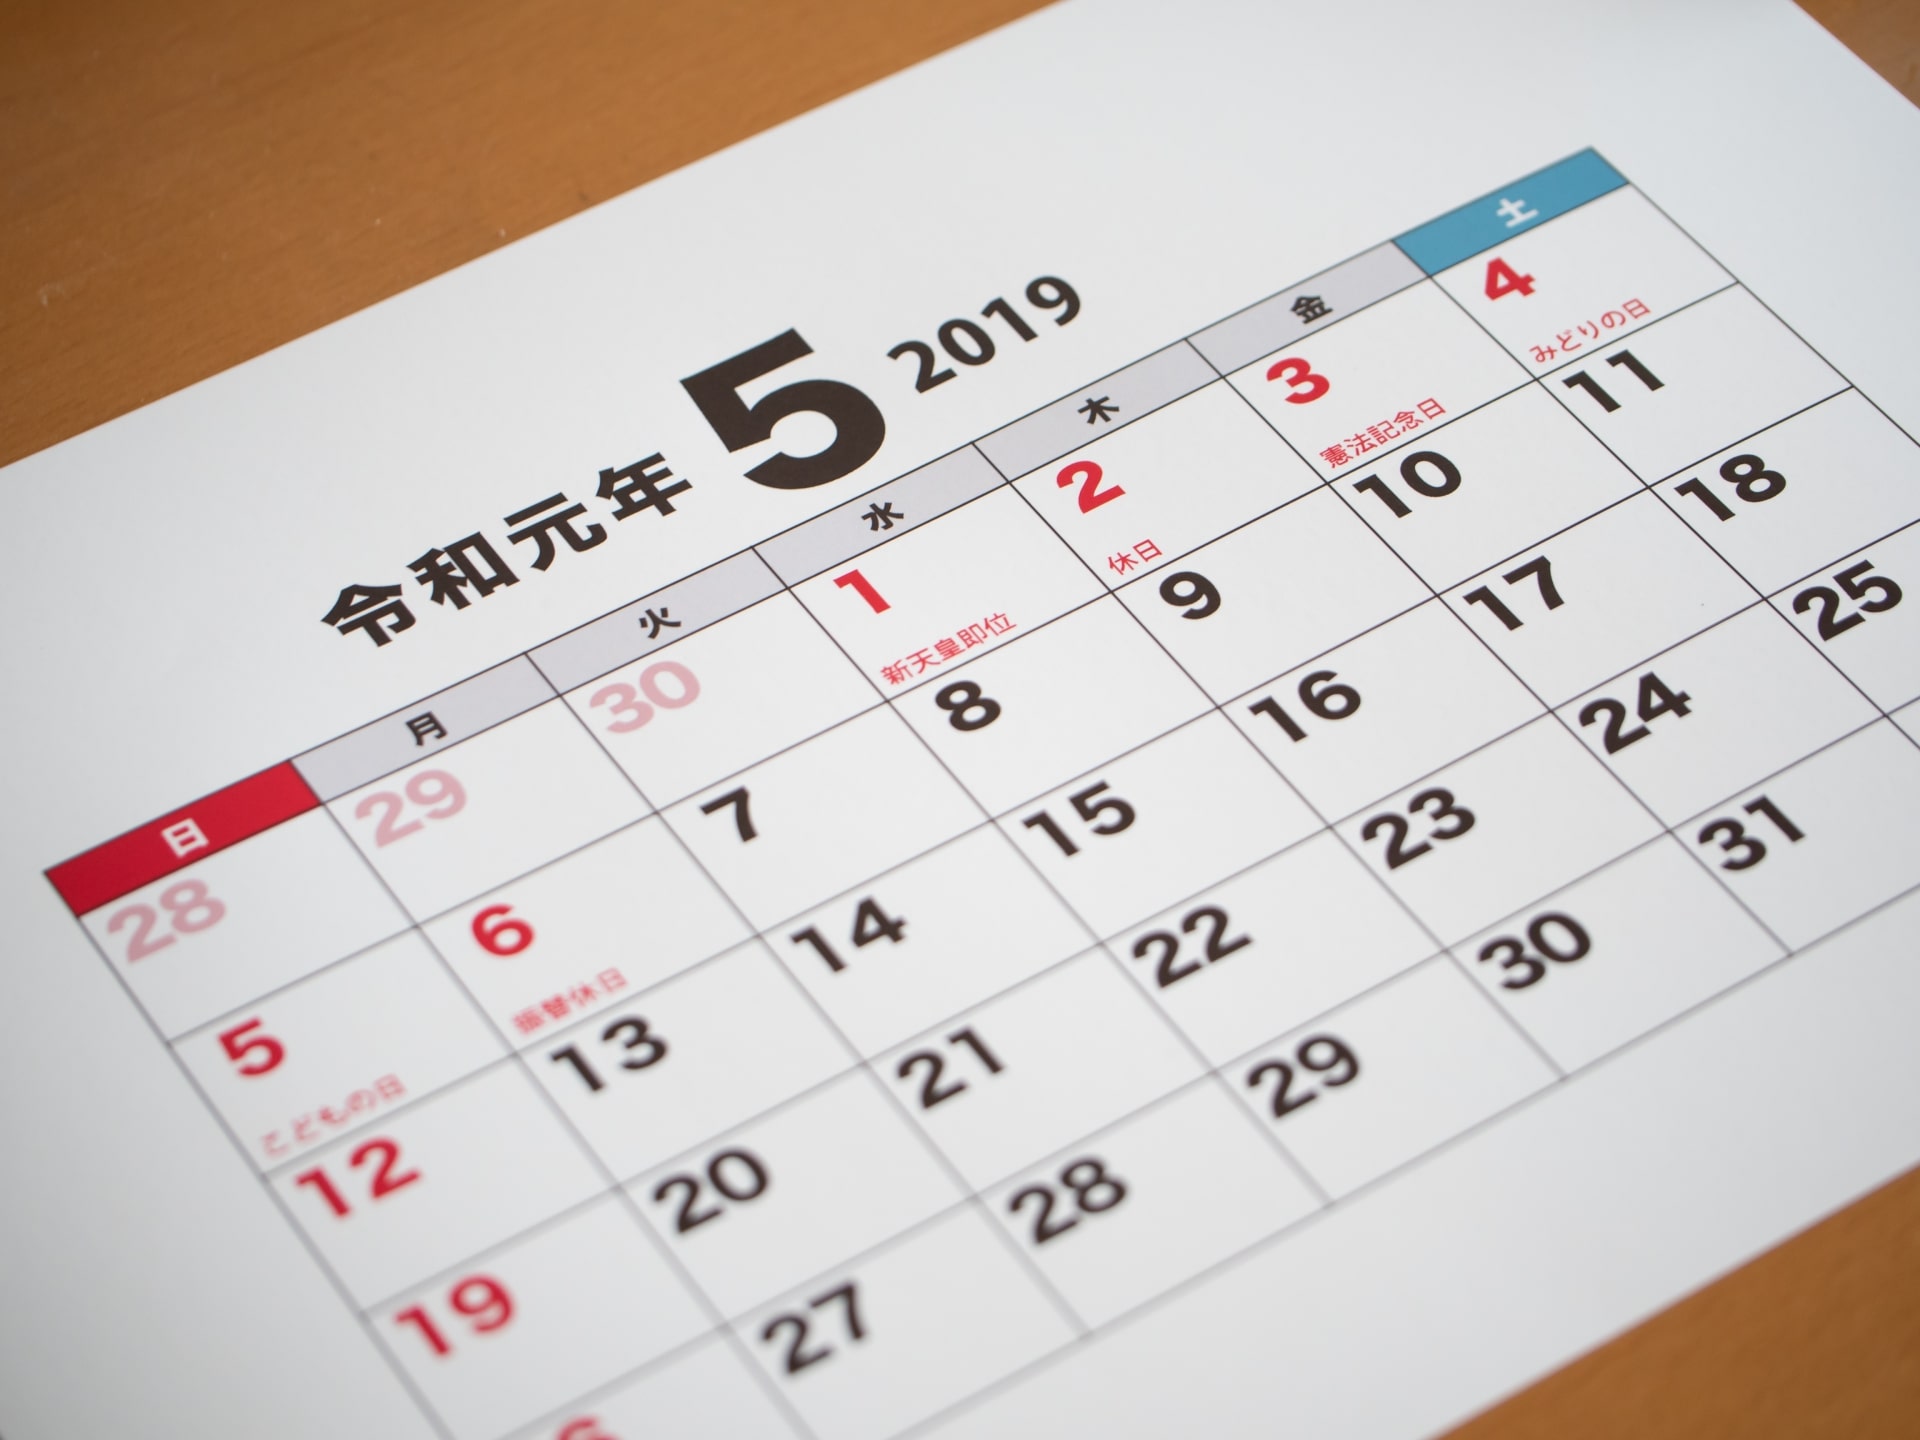 Reiwa calendar as part of the new era in Japan